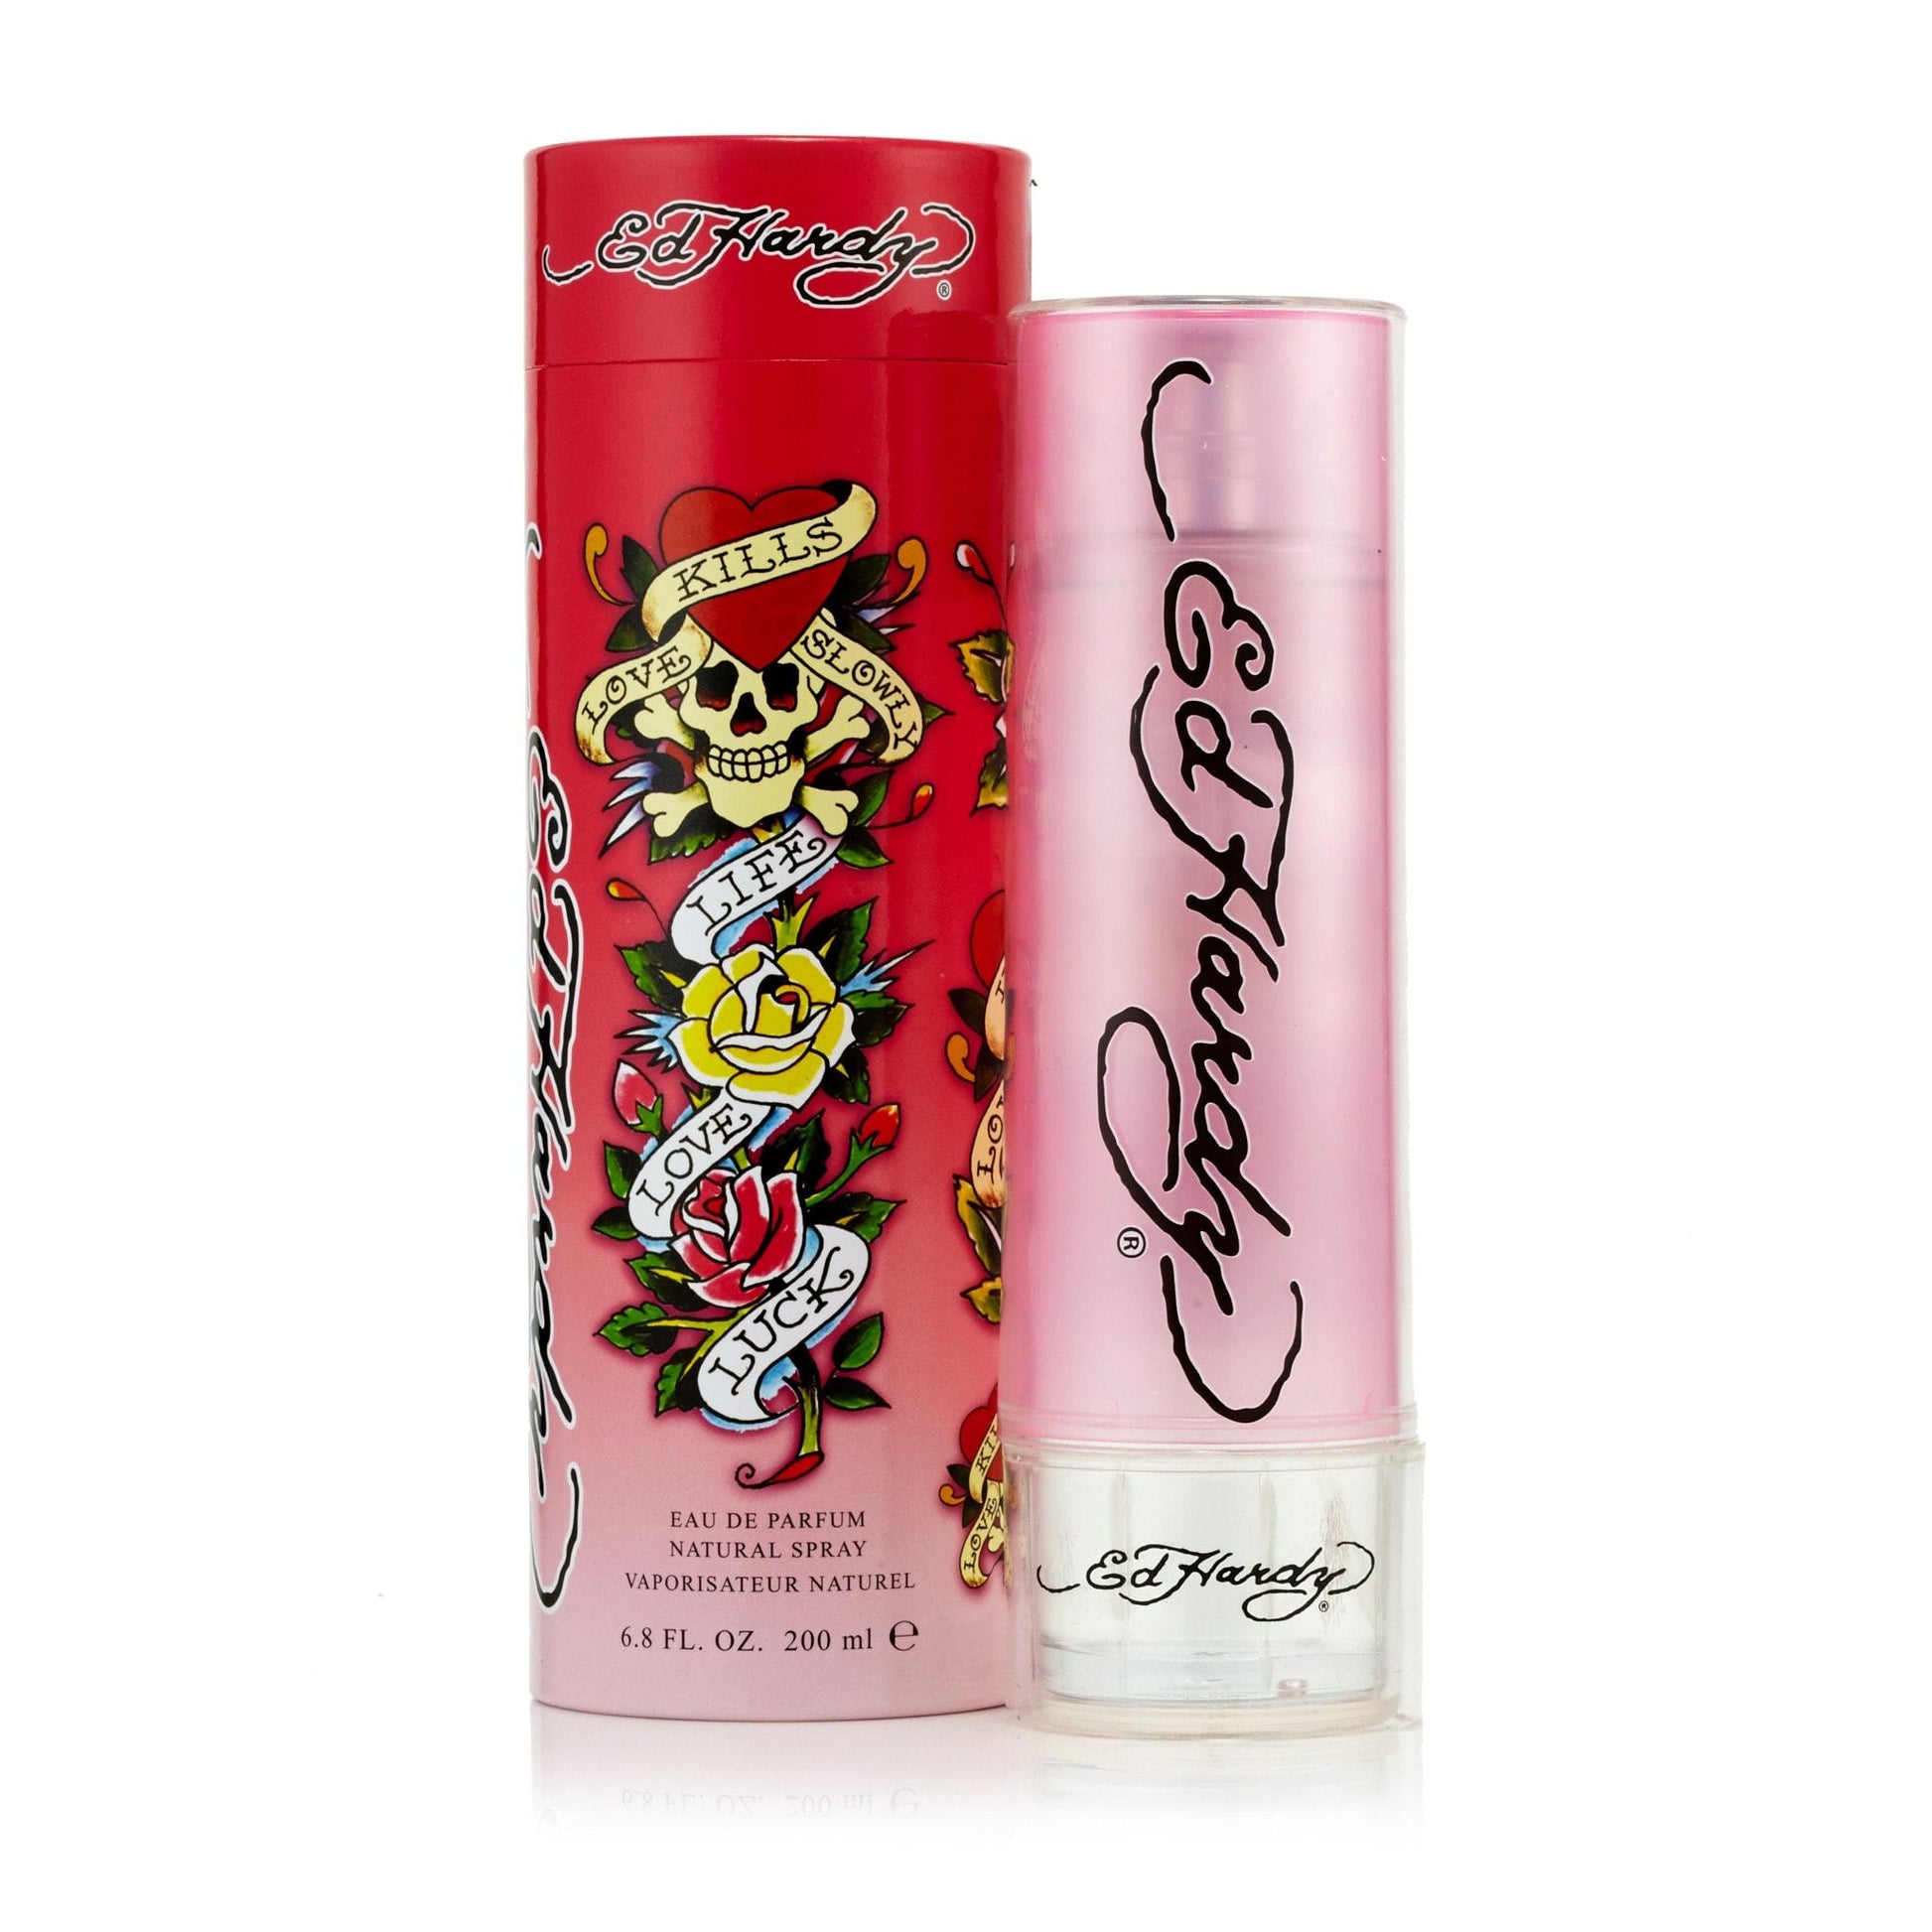 Ed Hardy Eau de Parfum Spray for Women by Christian Audigier, Product image 7